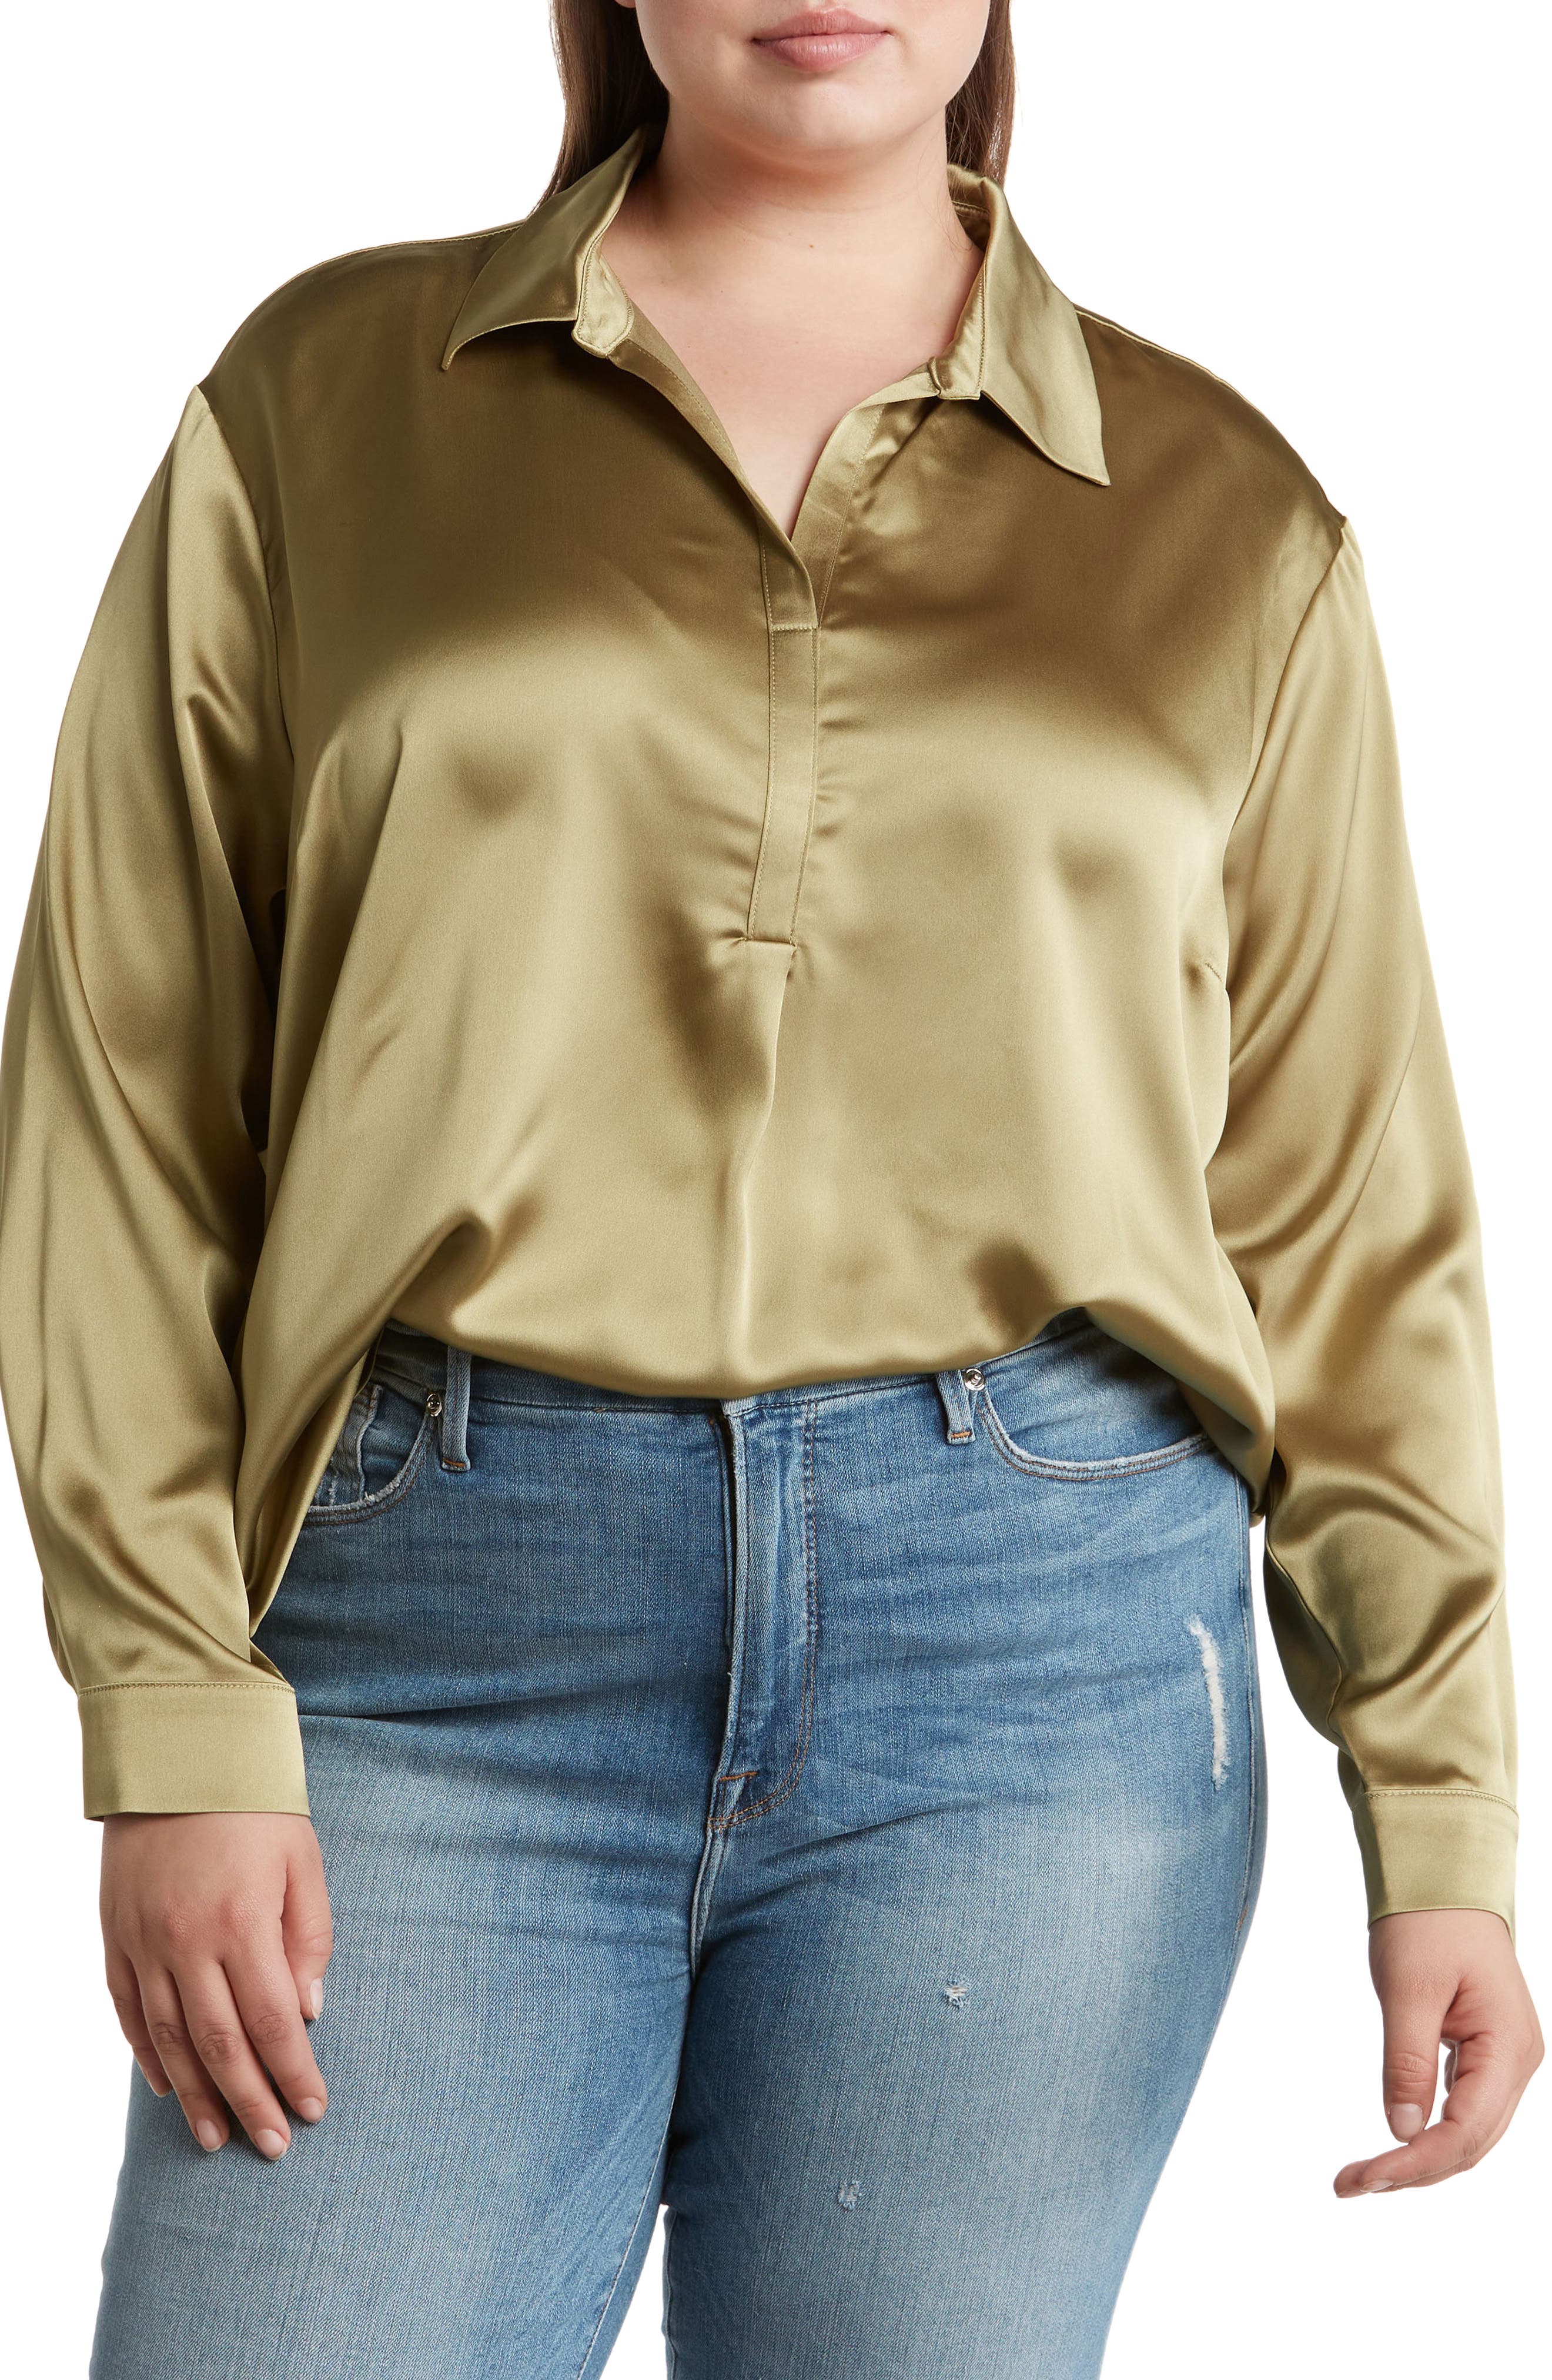 Beige M WOMEN FASHION Shirts & T-shirts Sequin discount 76% Next blouse 